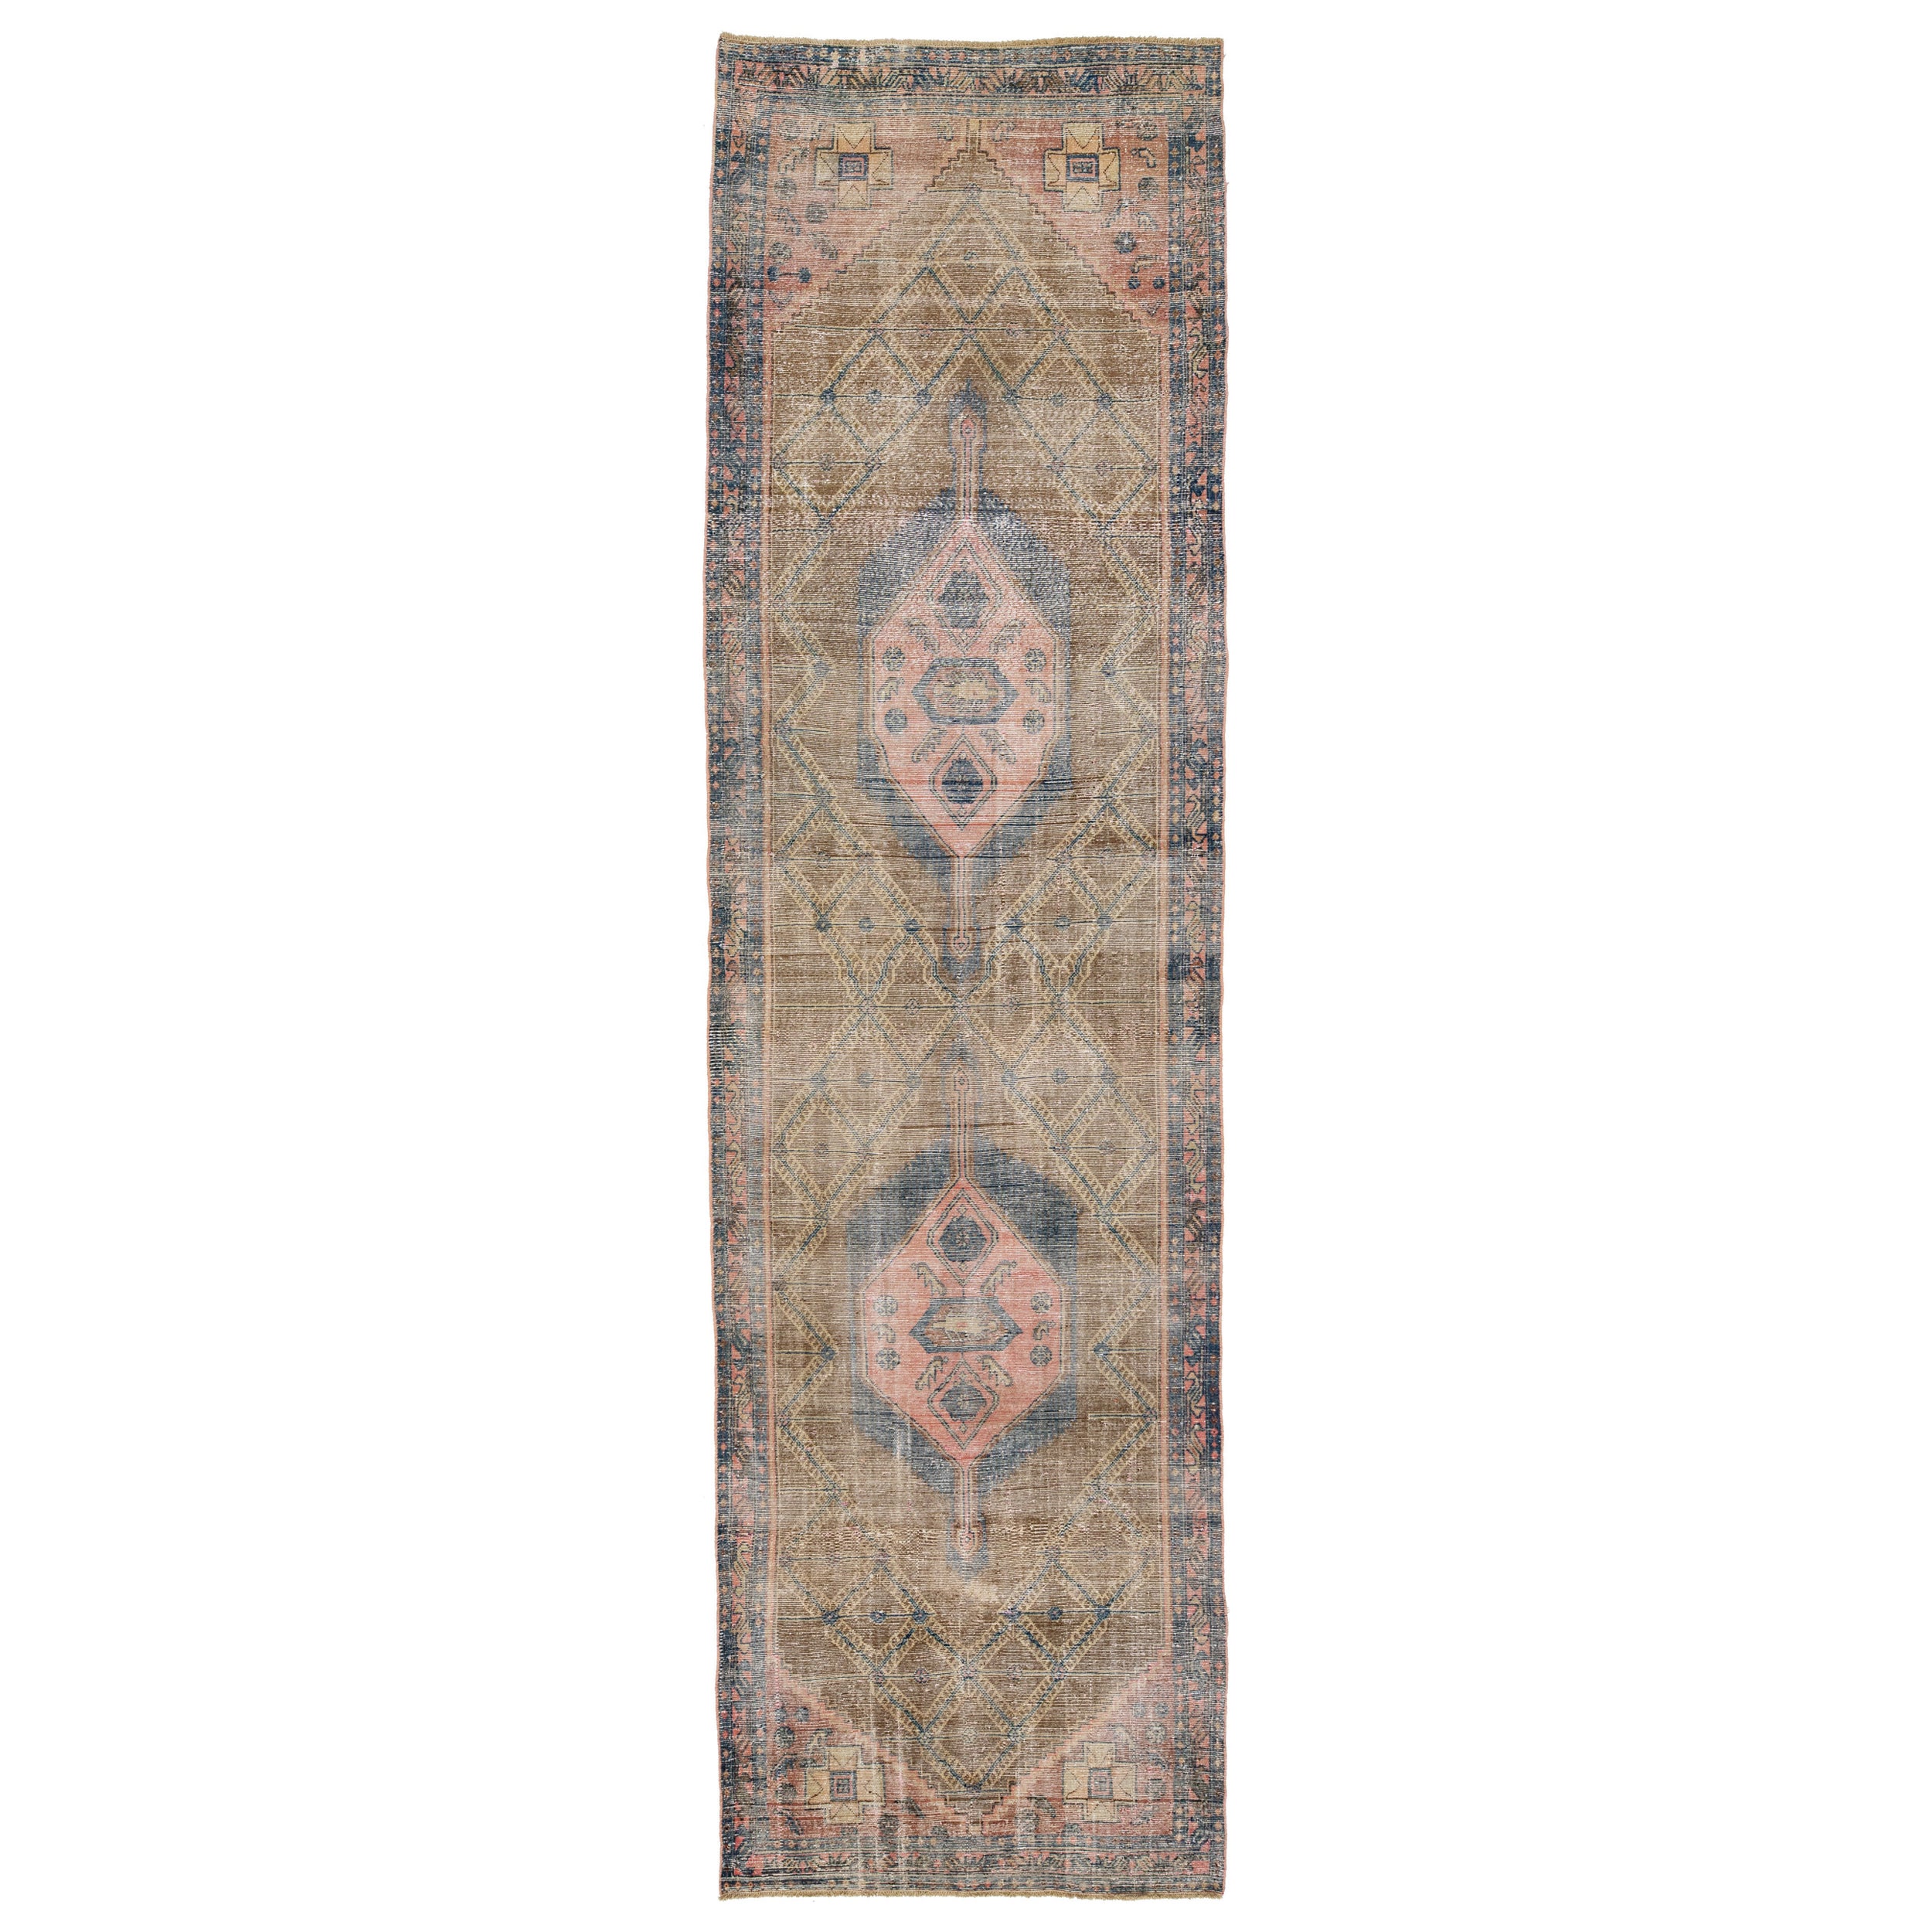 4 x 15 Vintage Distressed Persian Wool Runner In Brown With Tribal Motif (Chemin de table en laine persane vieillie avec motif tribal)